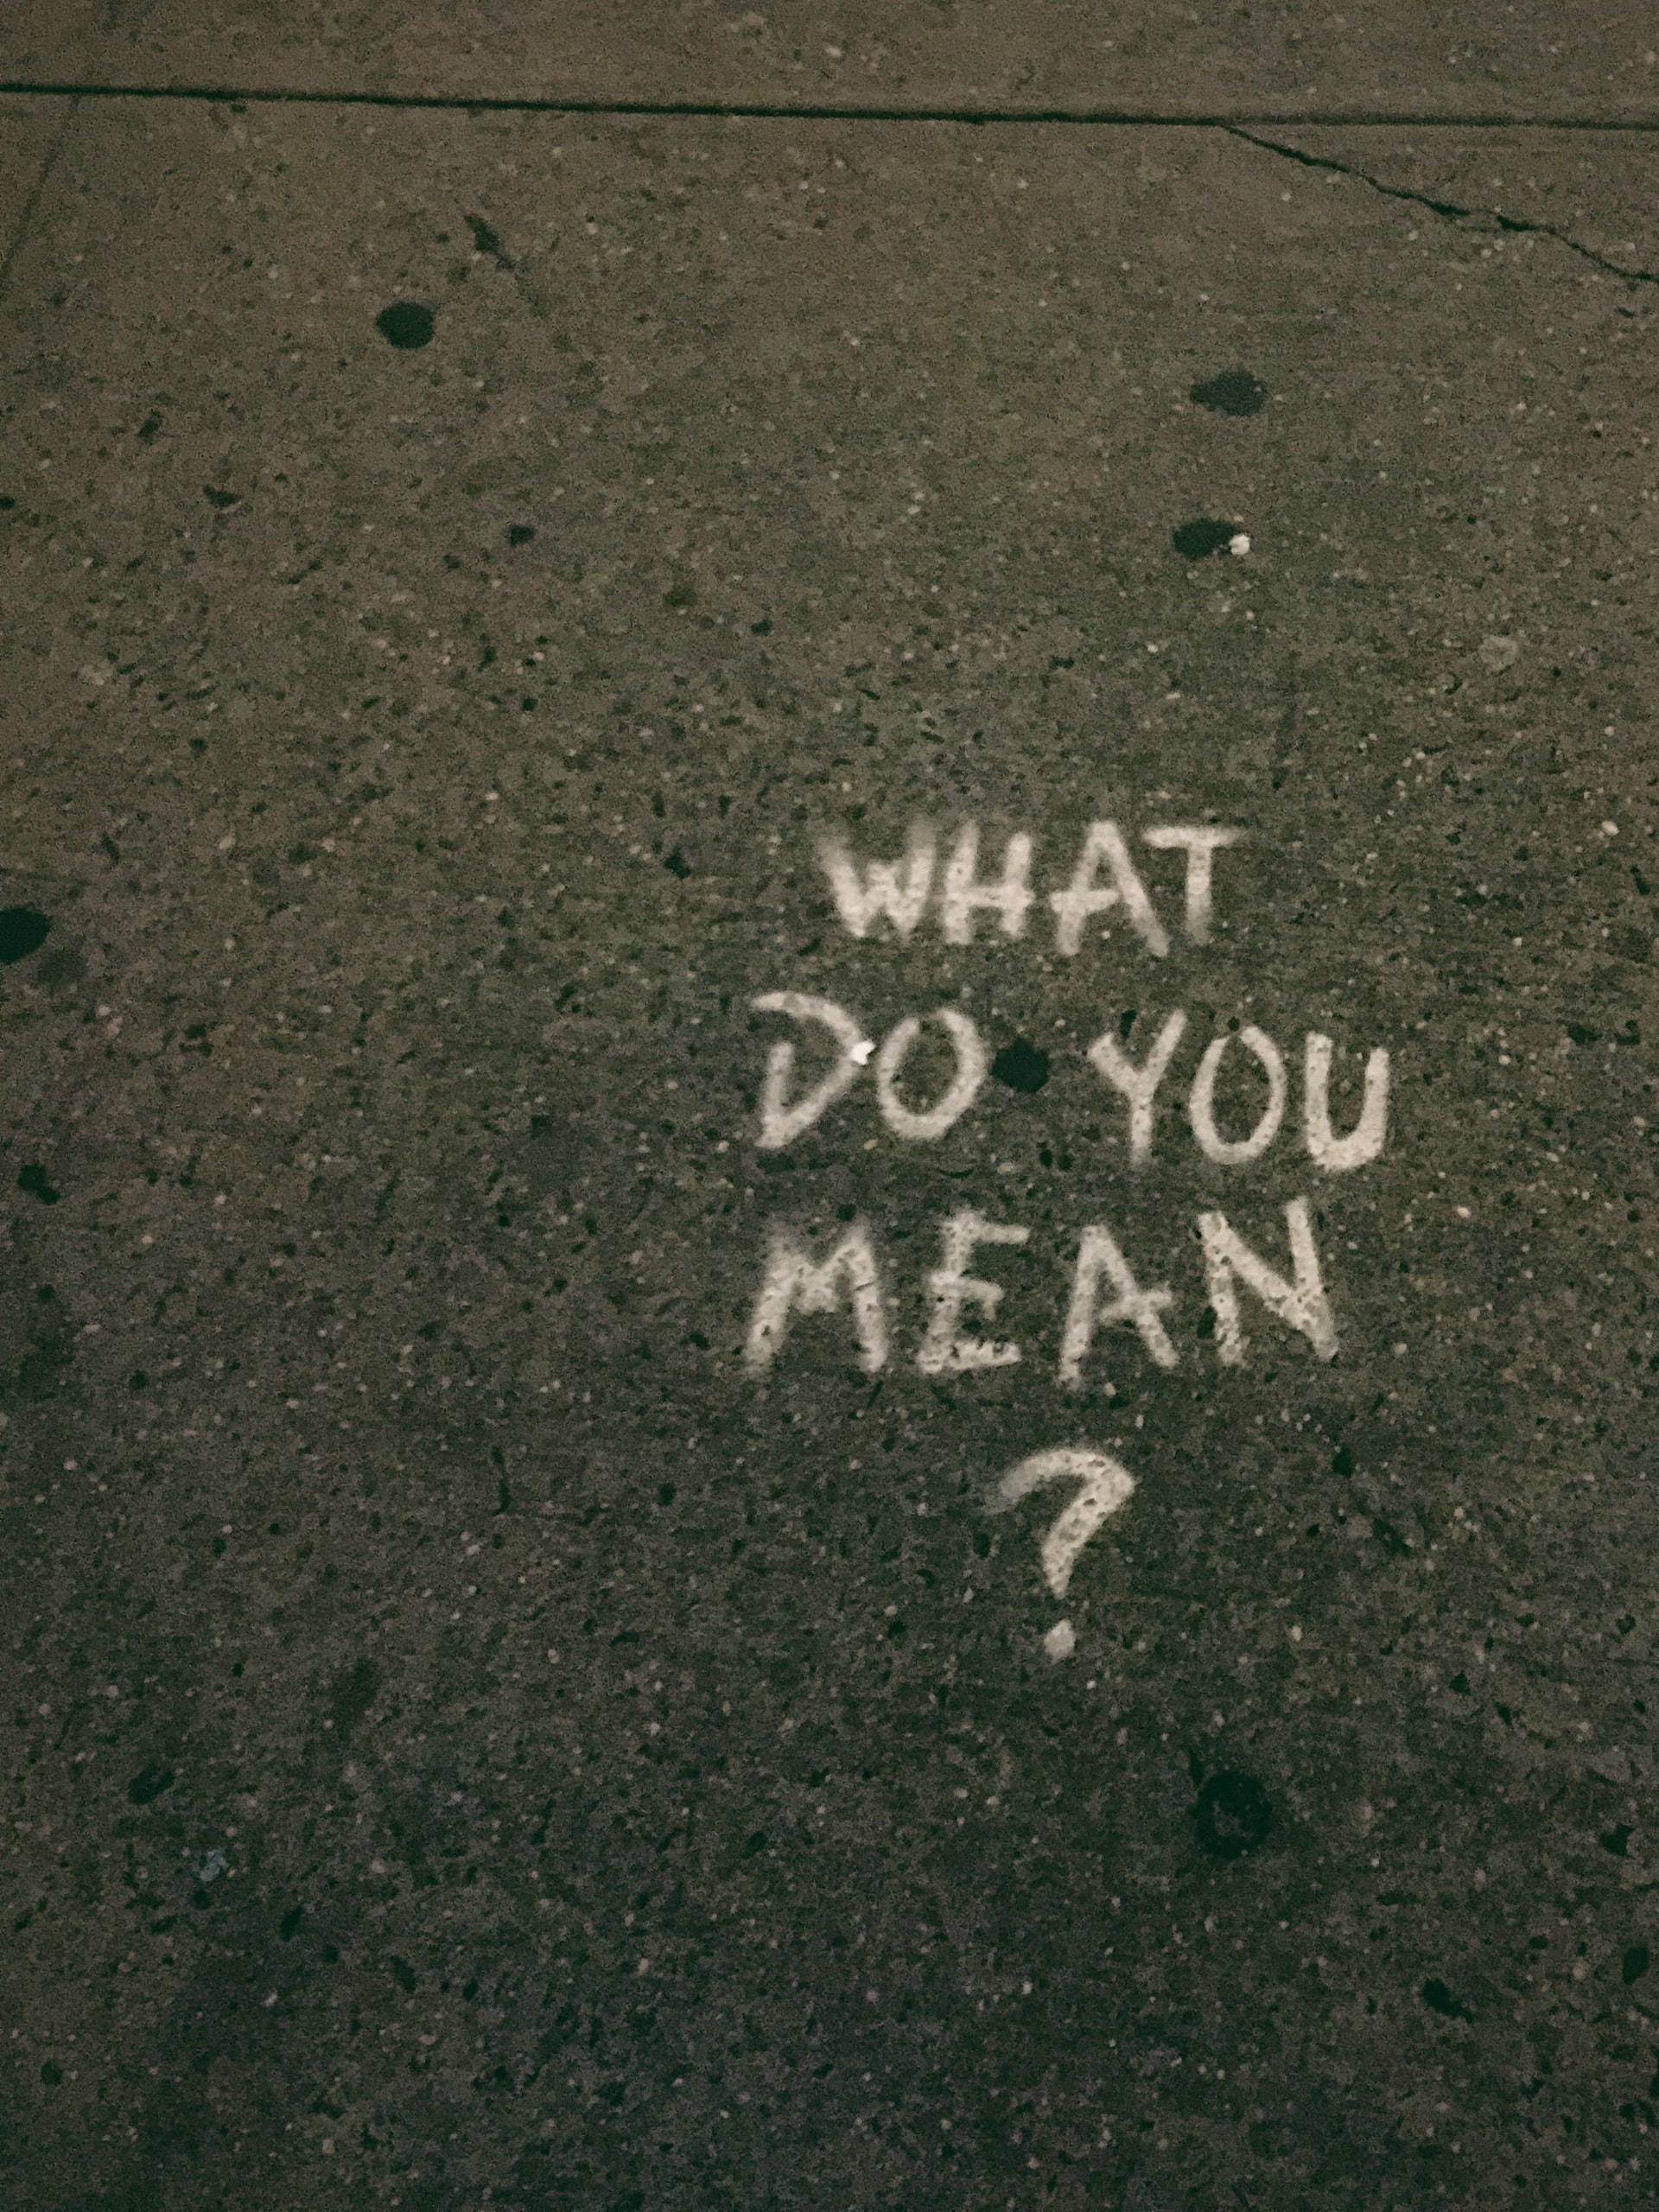 Las palabras “¿A qué te refieres?” escrito en tiza sobre pavimento.